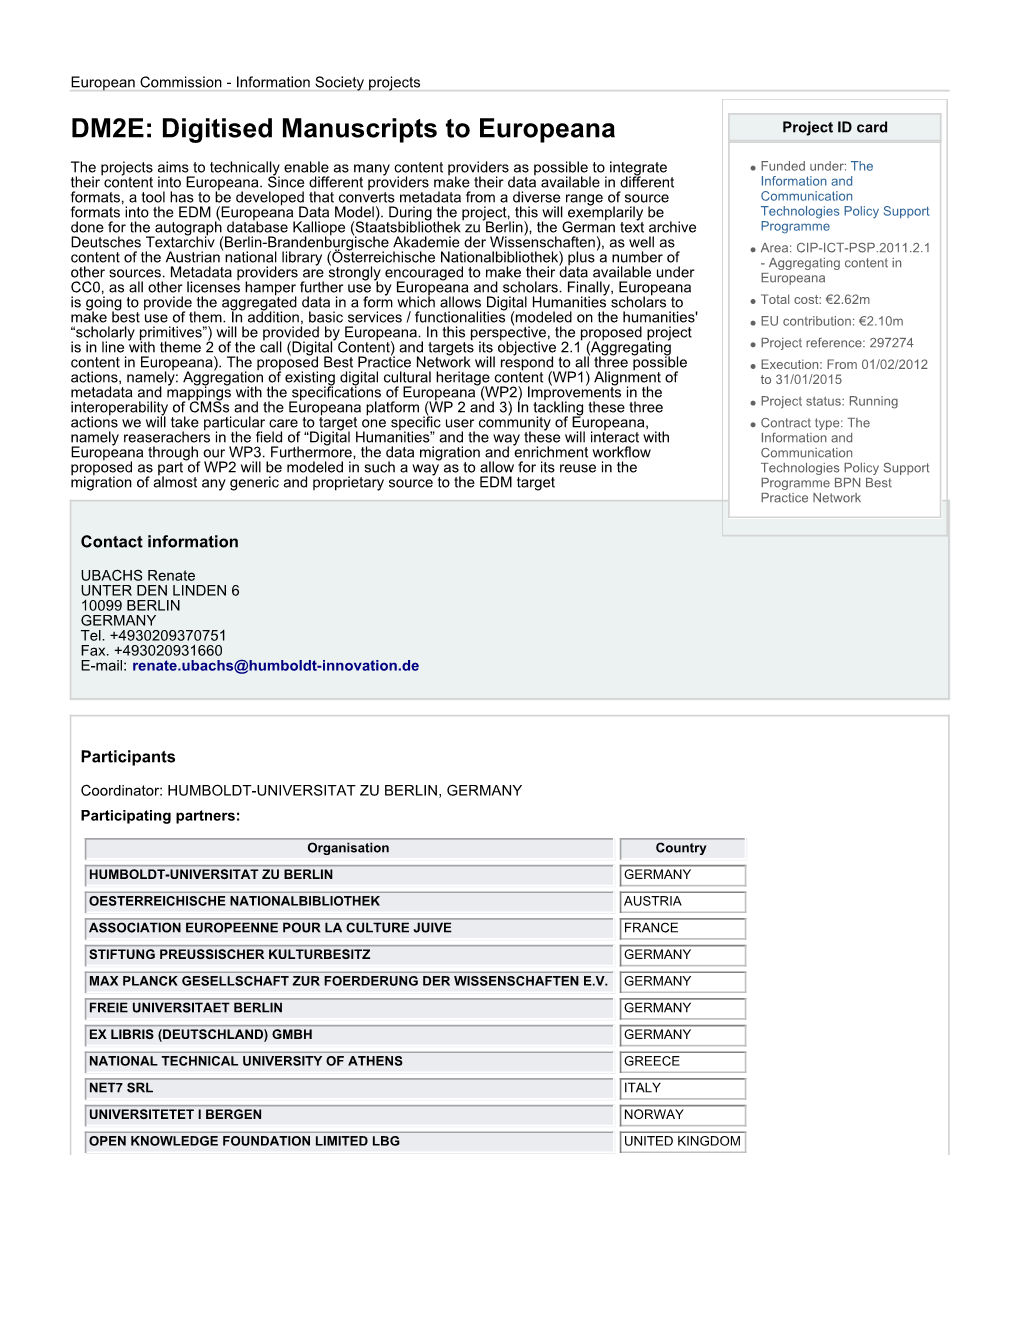 DM2E: Digitised Manuscripts to Europeana Project ID Card